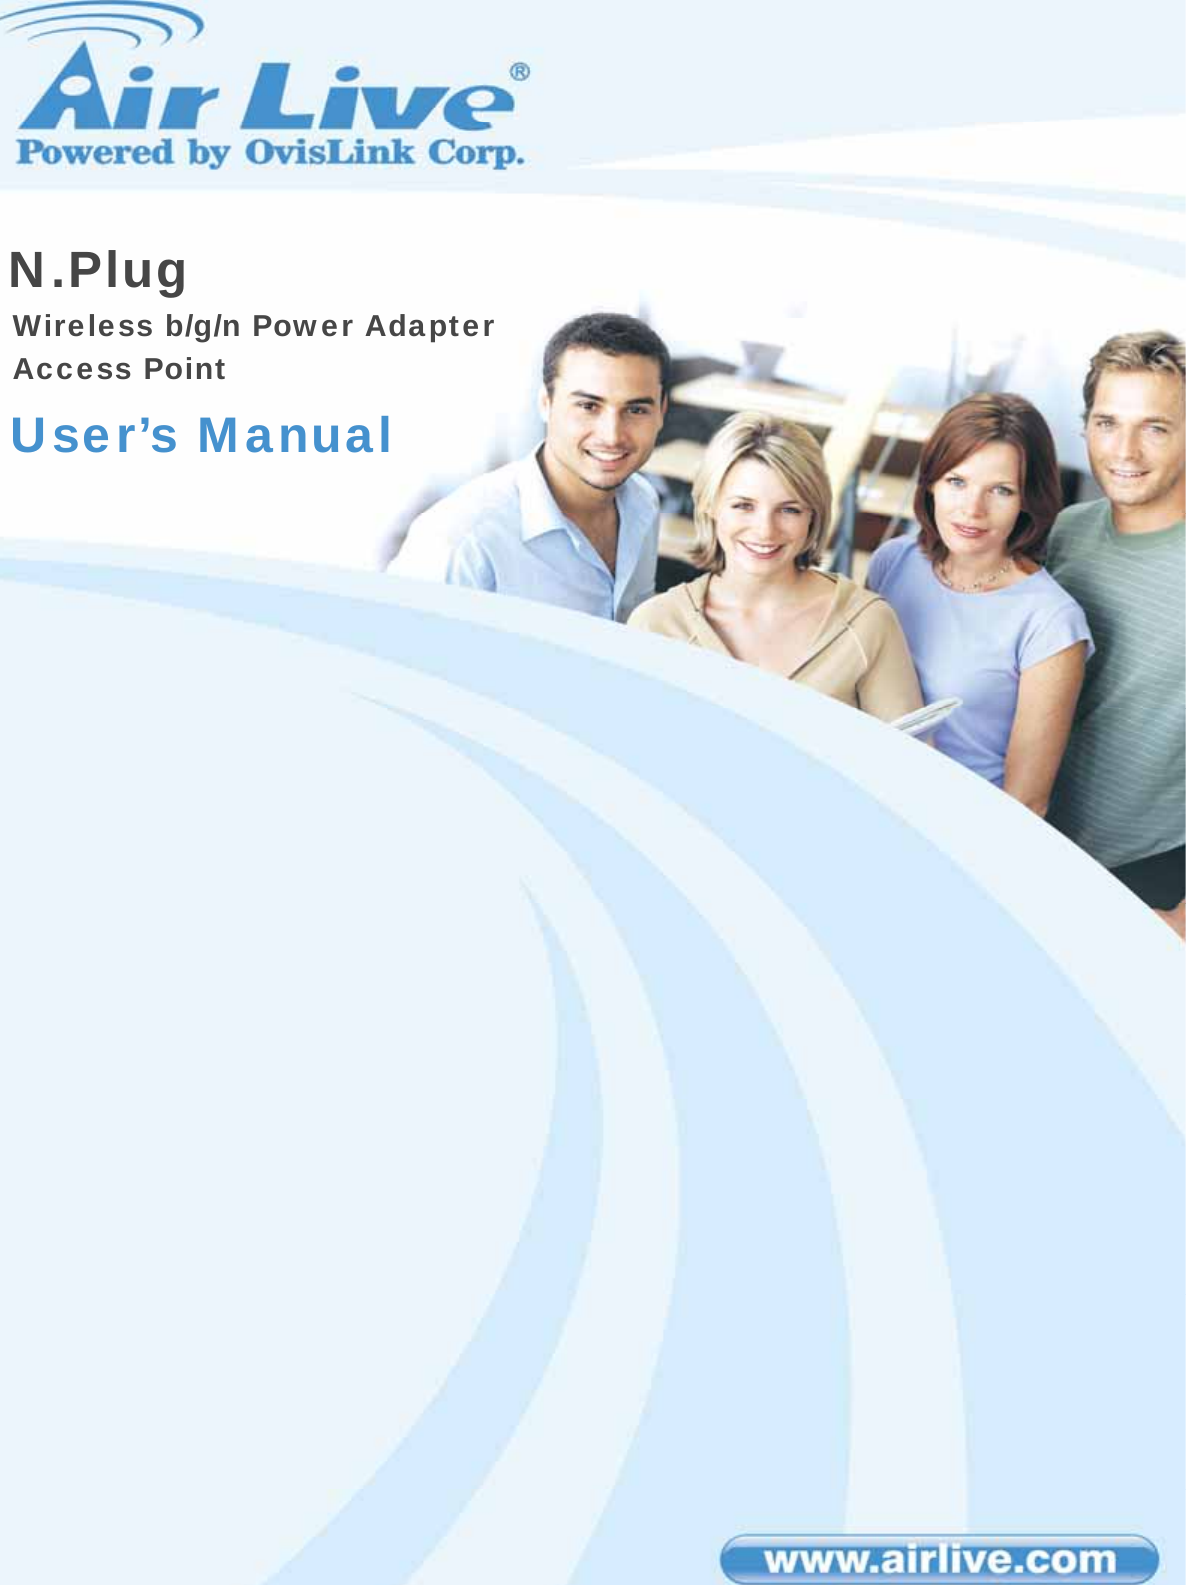  1 N.Plug Wireless b/g/n Power Adapter Access Point User’s Manual 